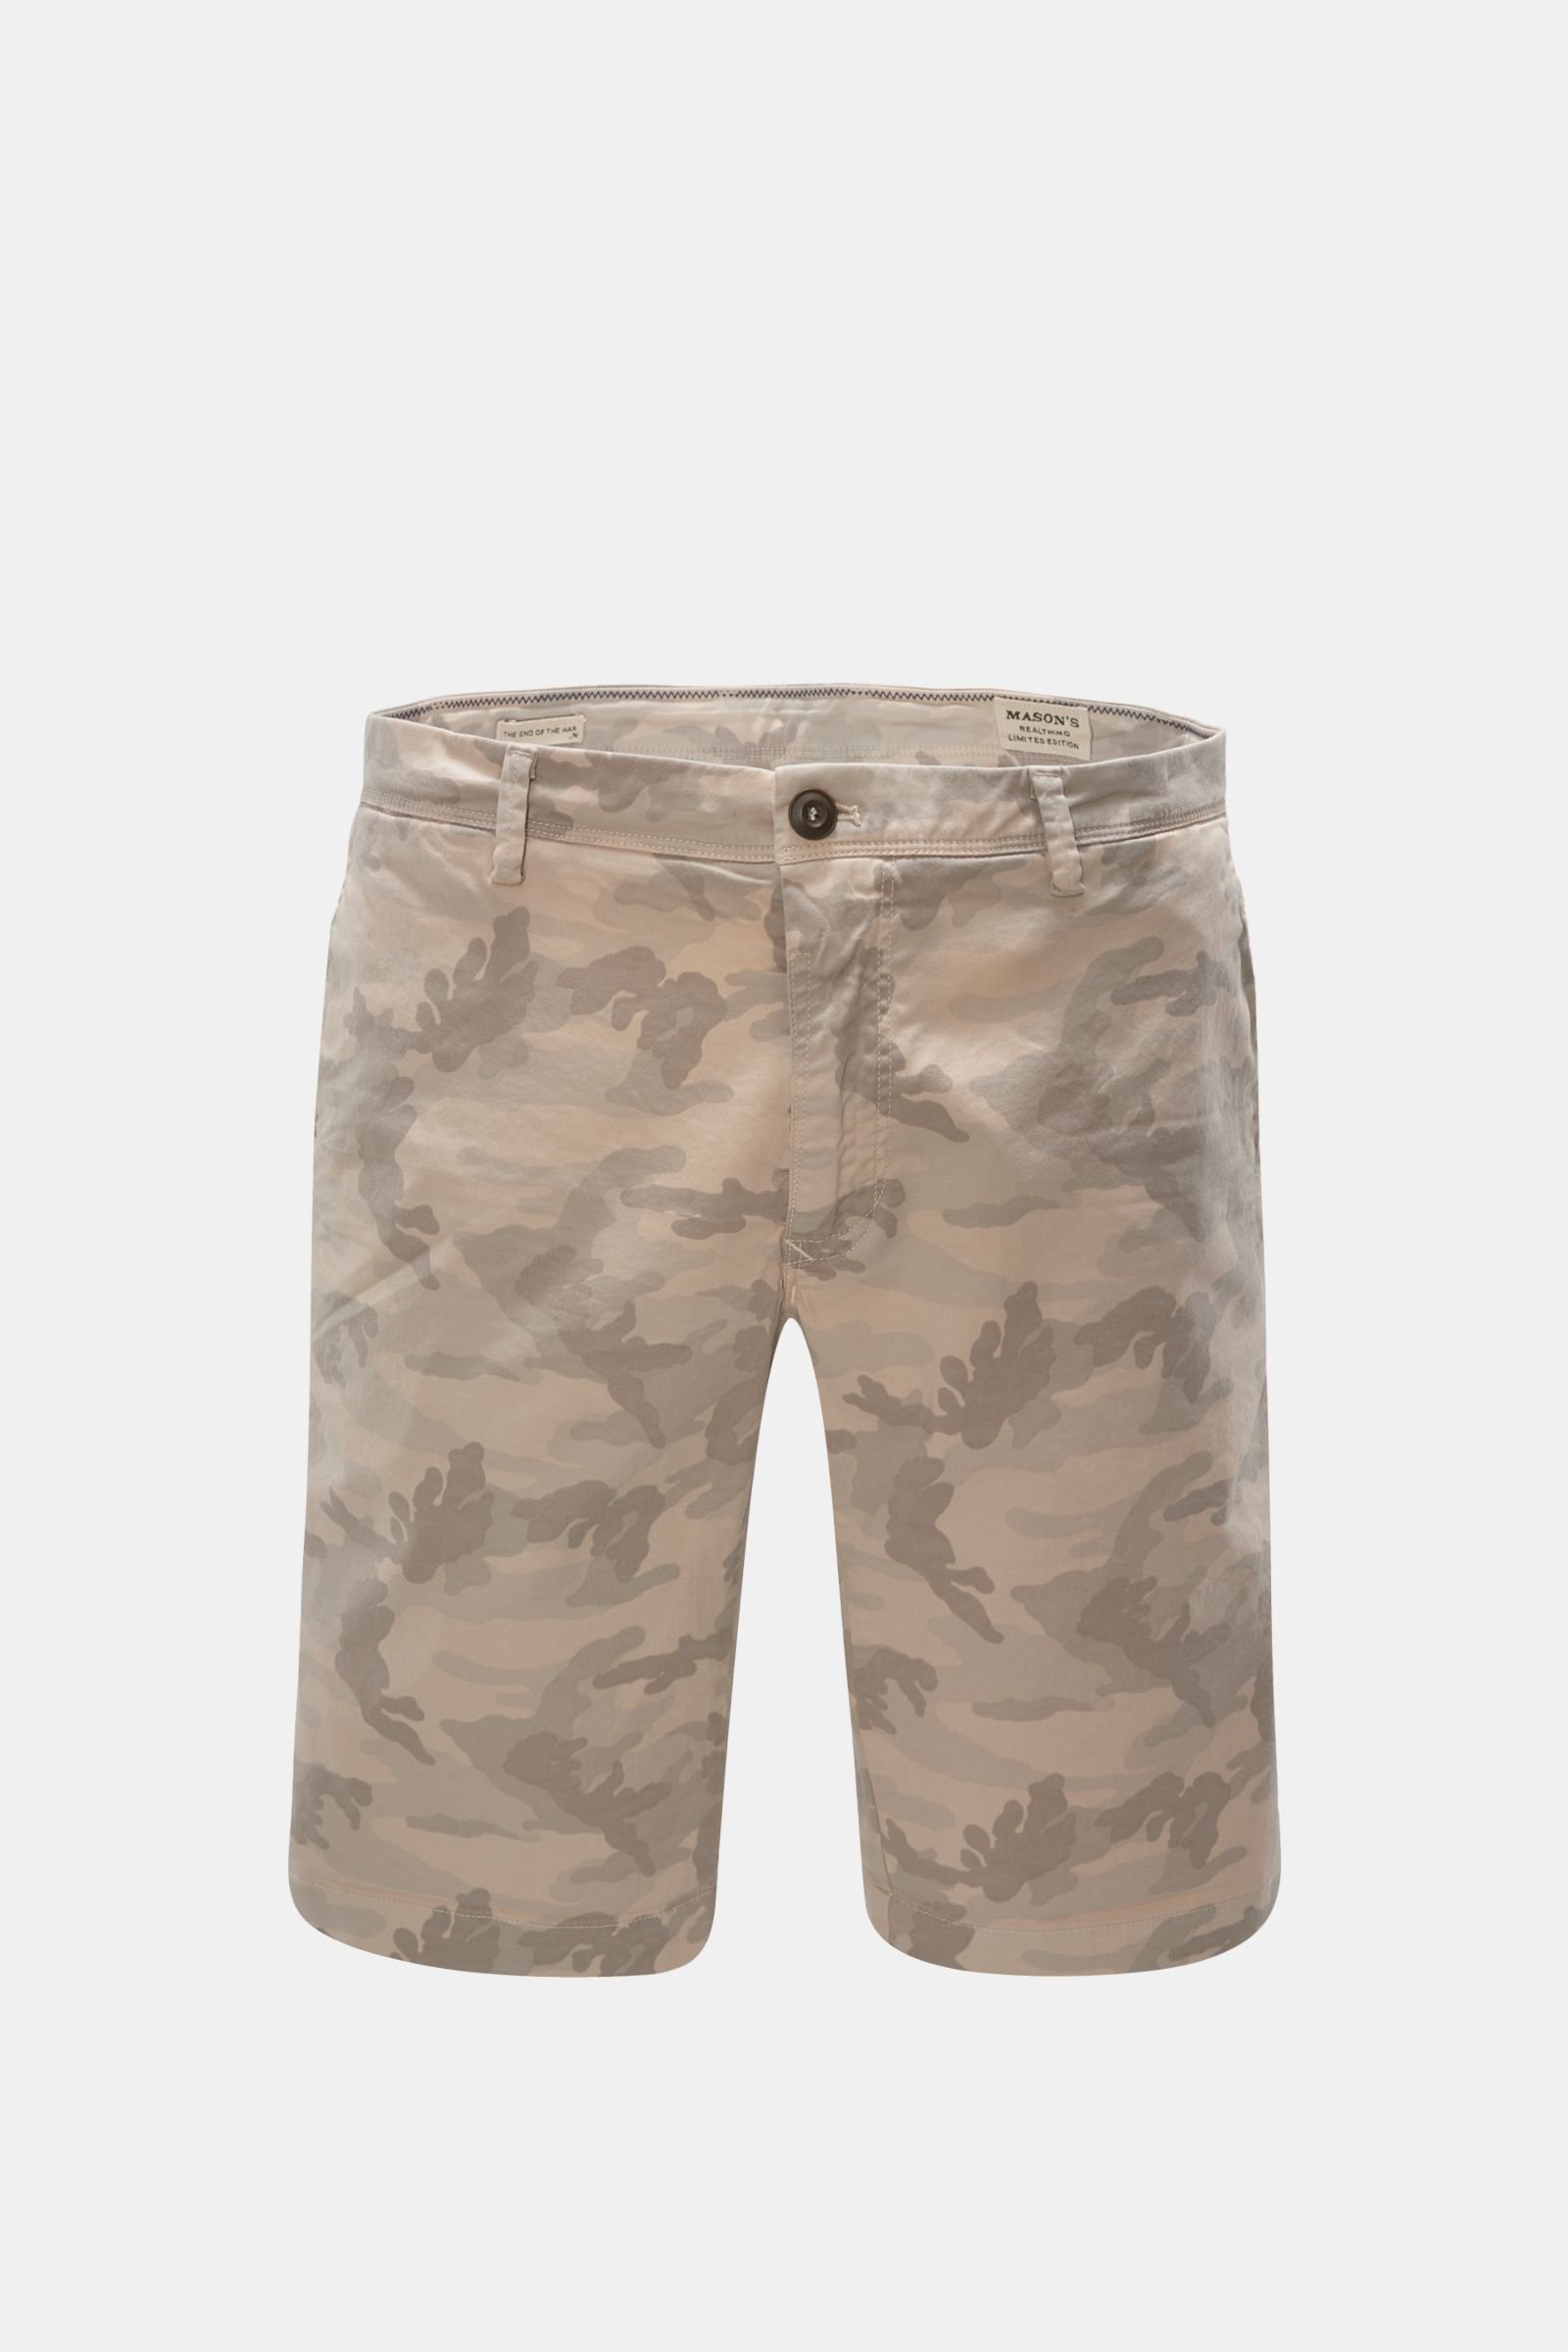 Bermuda shorts 'Eisenhower' beige/grey patterned